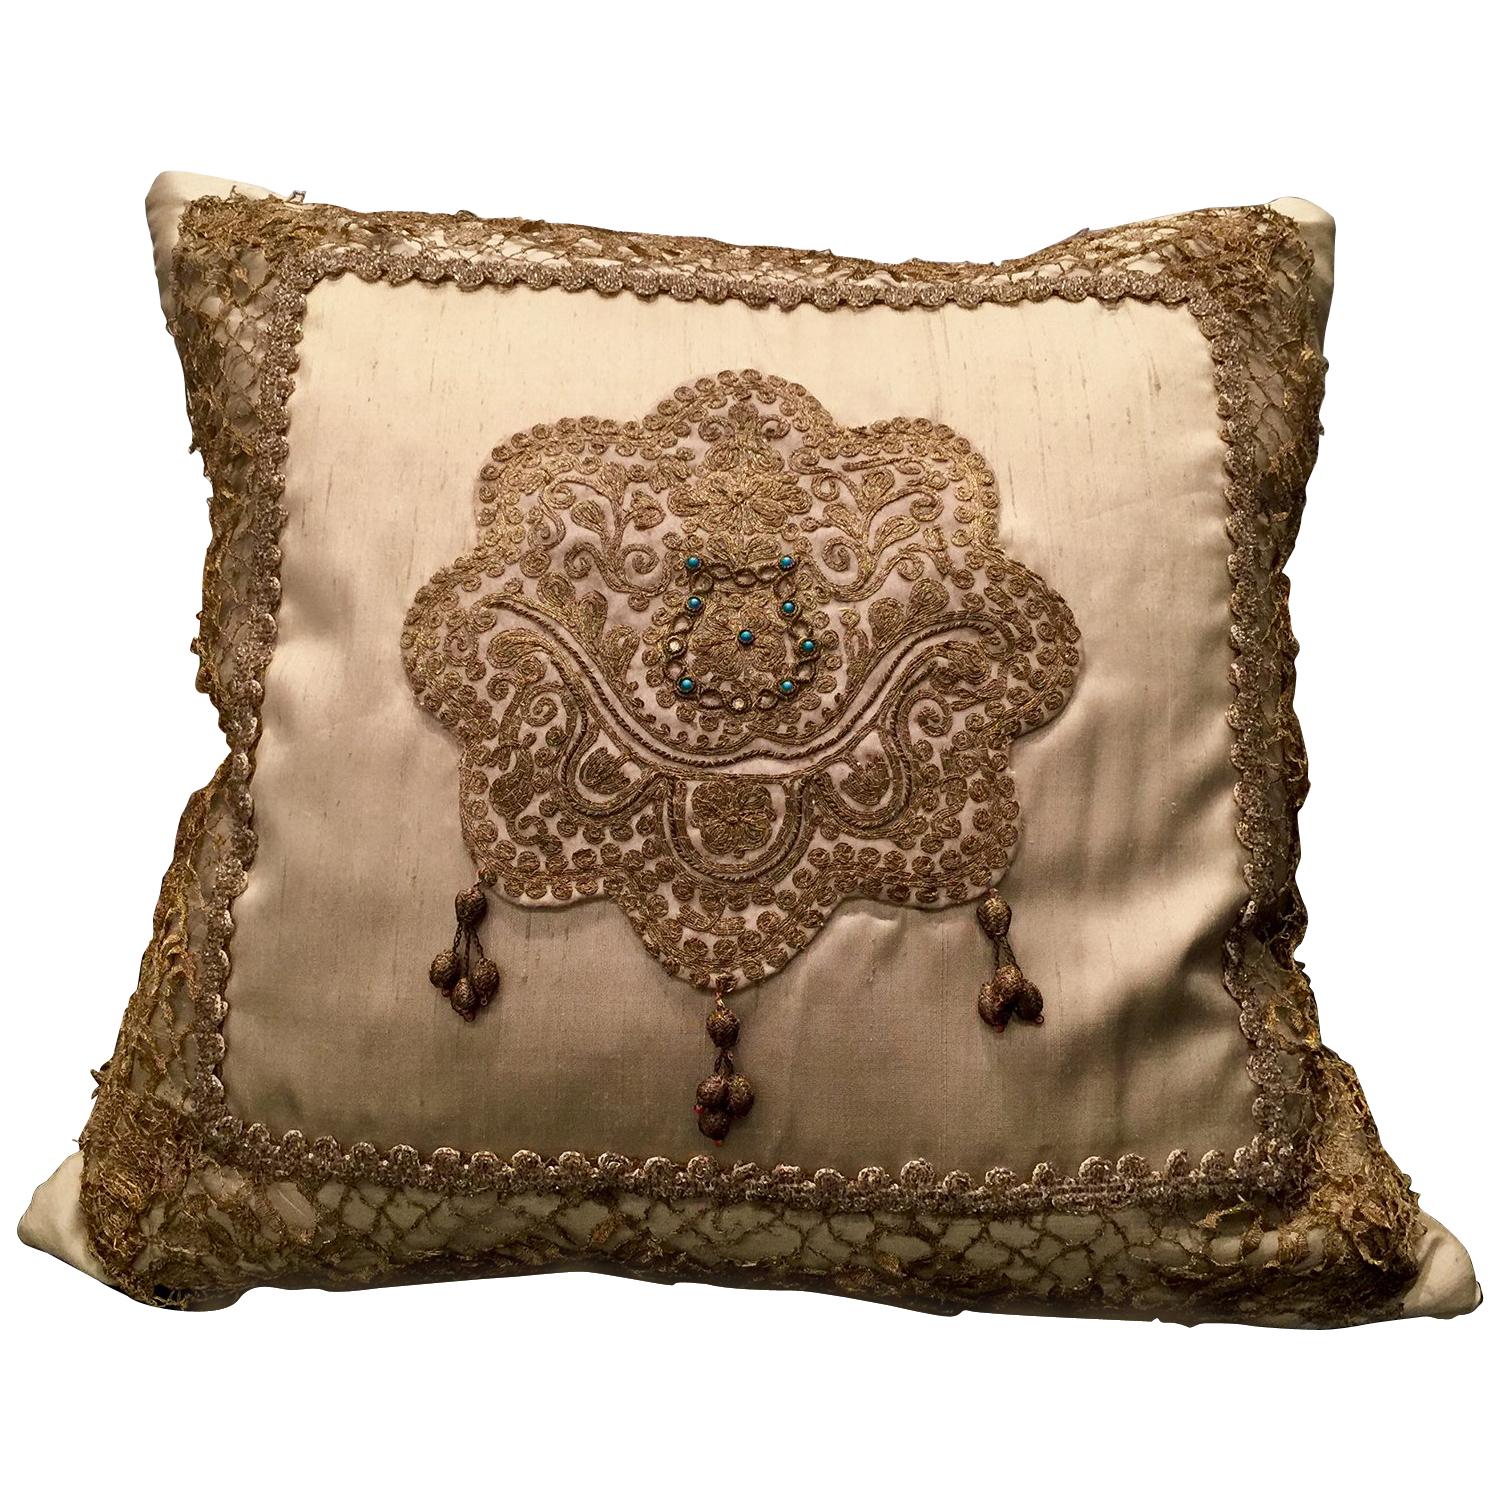 Antique Venetian Embroidery Pillow by Eleganza Italiana